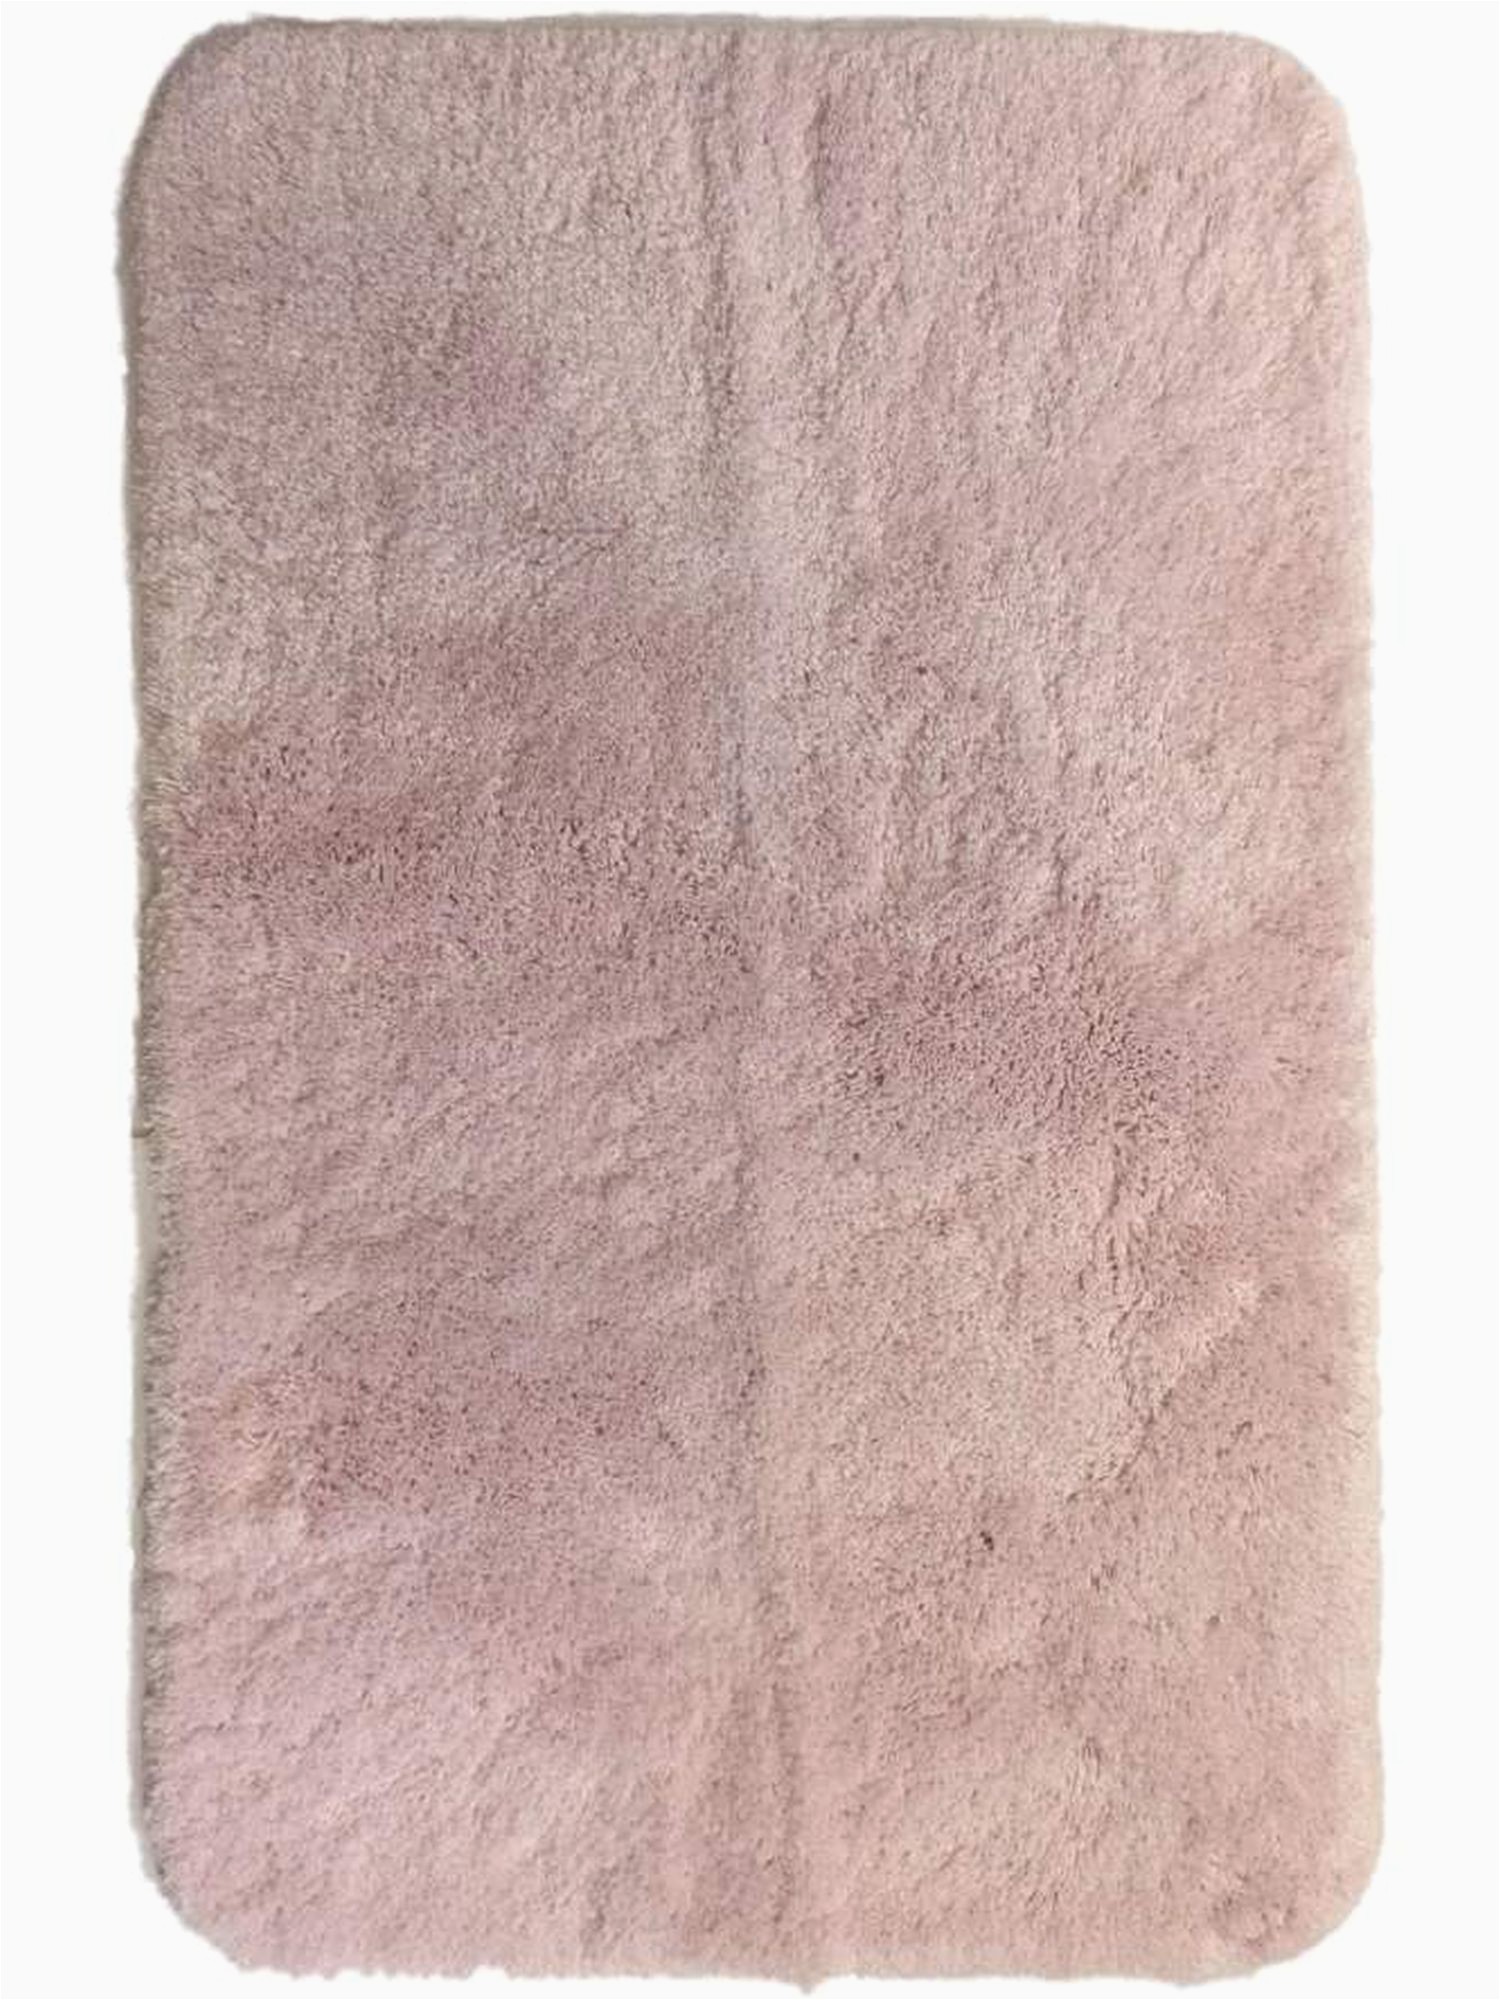 Sonoma Cotton Bath Rugs sonoma Ultimate Plush Pink Blush Skid Resistant Bath Rug 24×38 Bath Mat Walmart